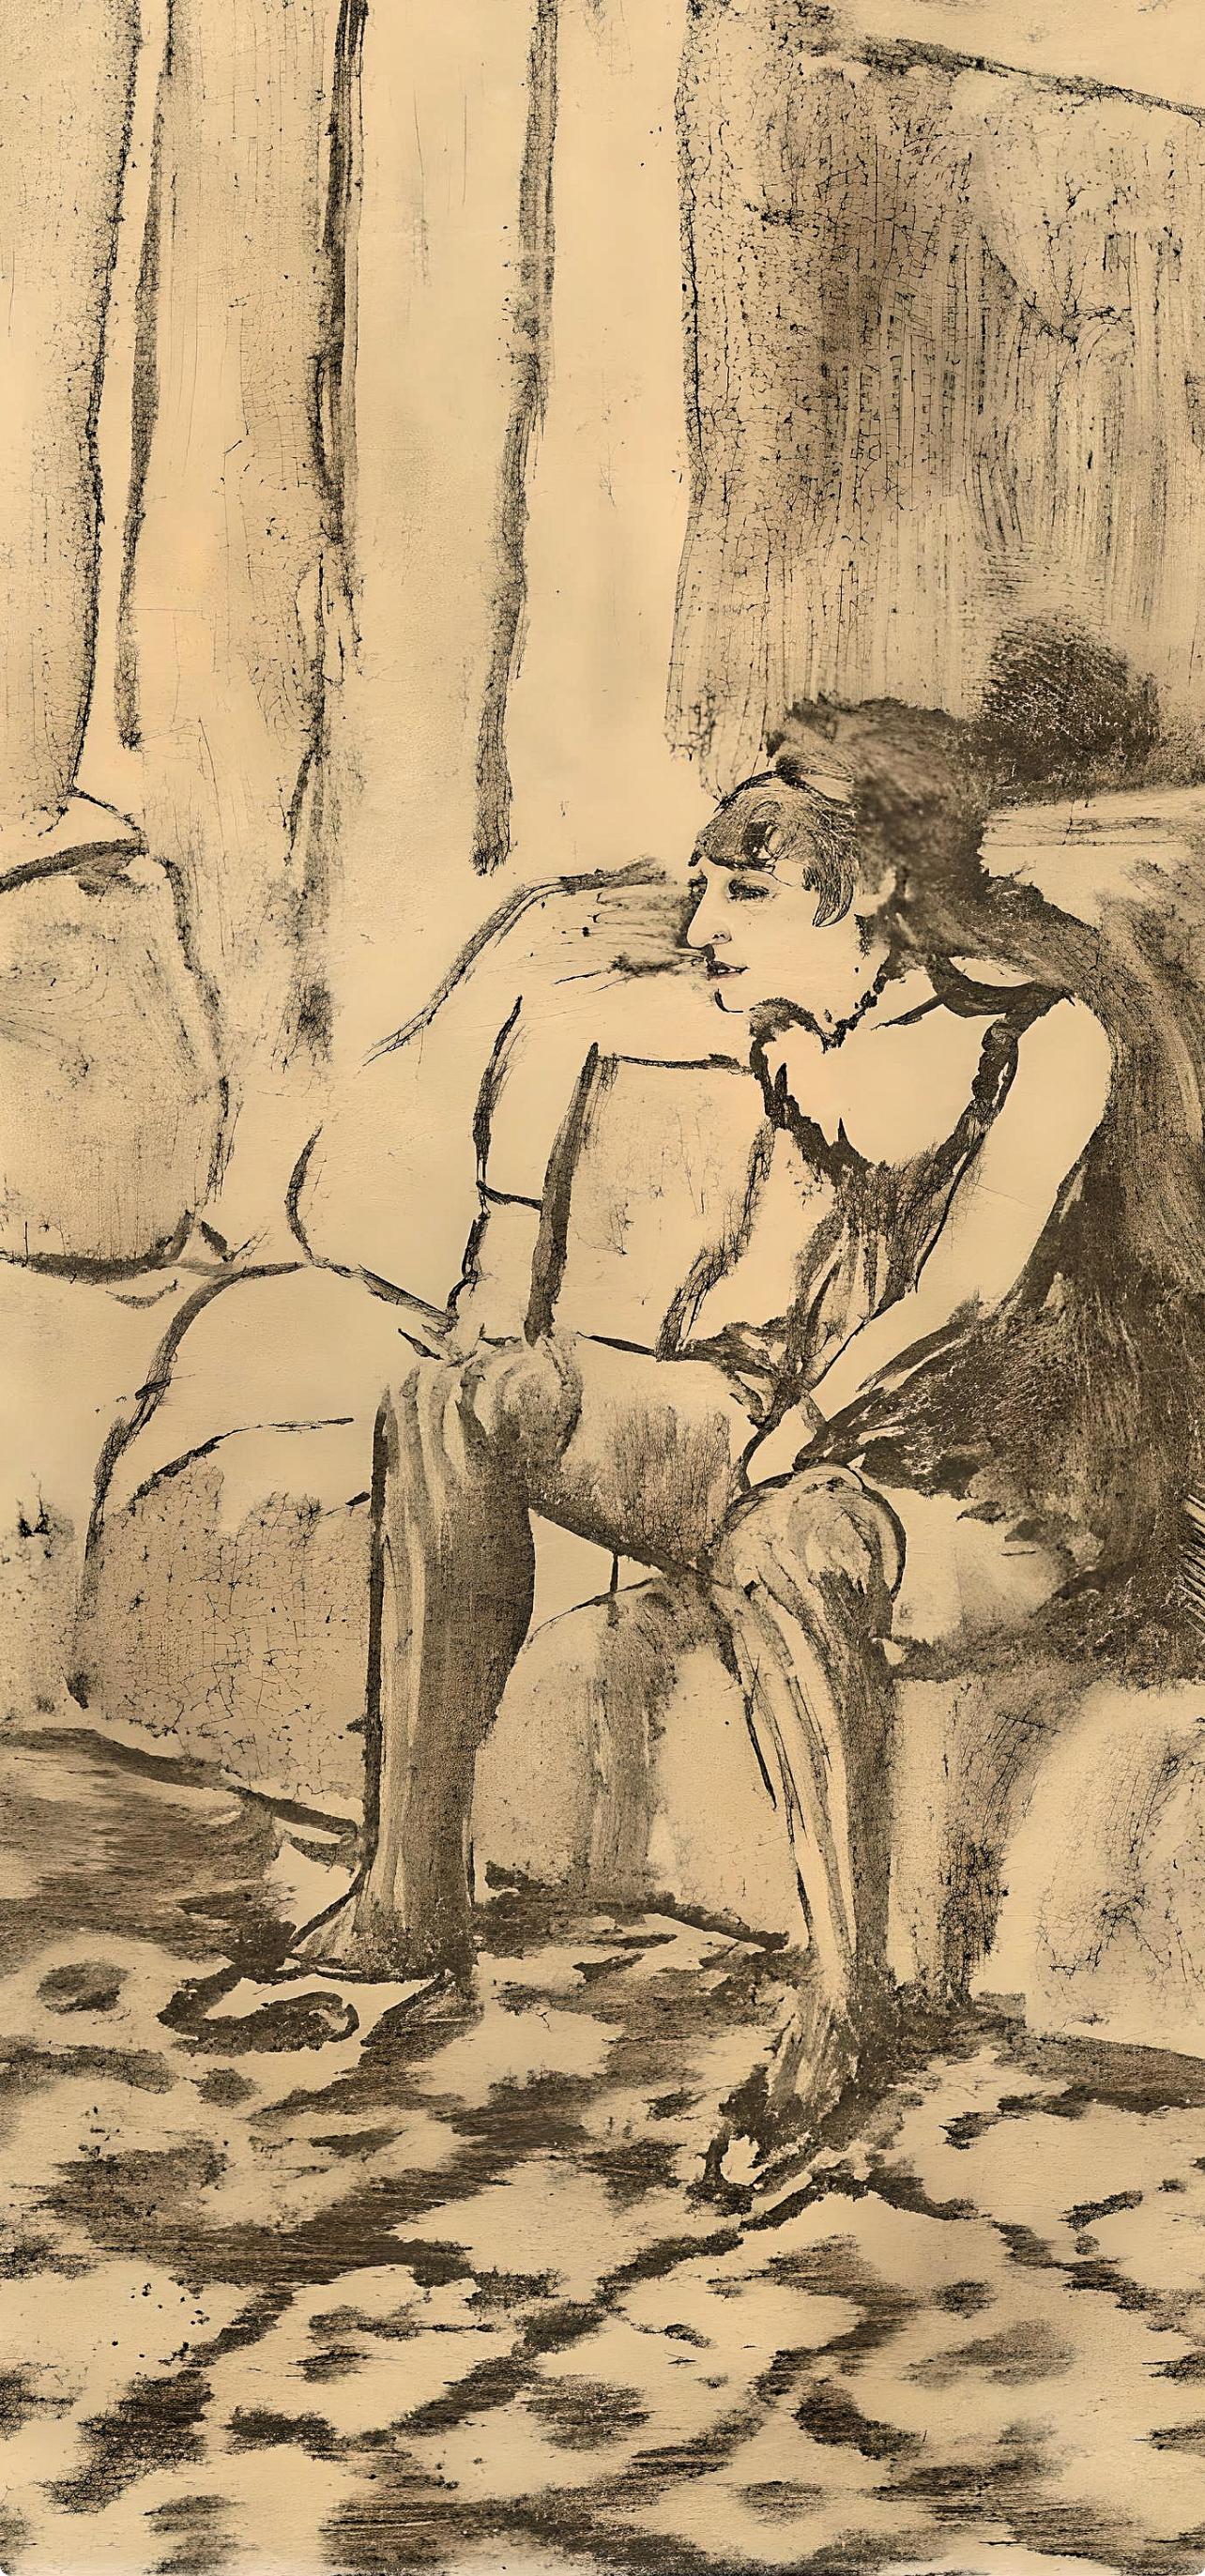 Degas, Deux Femmes, Les Monotypes (after) - Impressionist Print by Edgar Degas